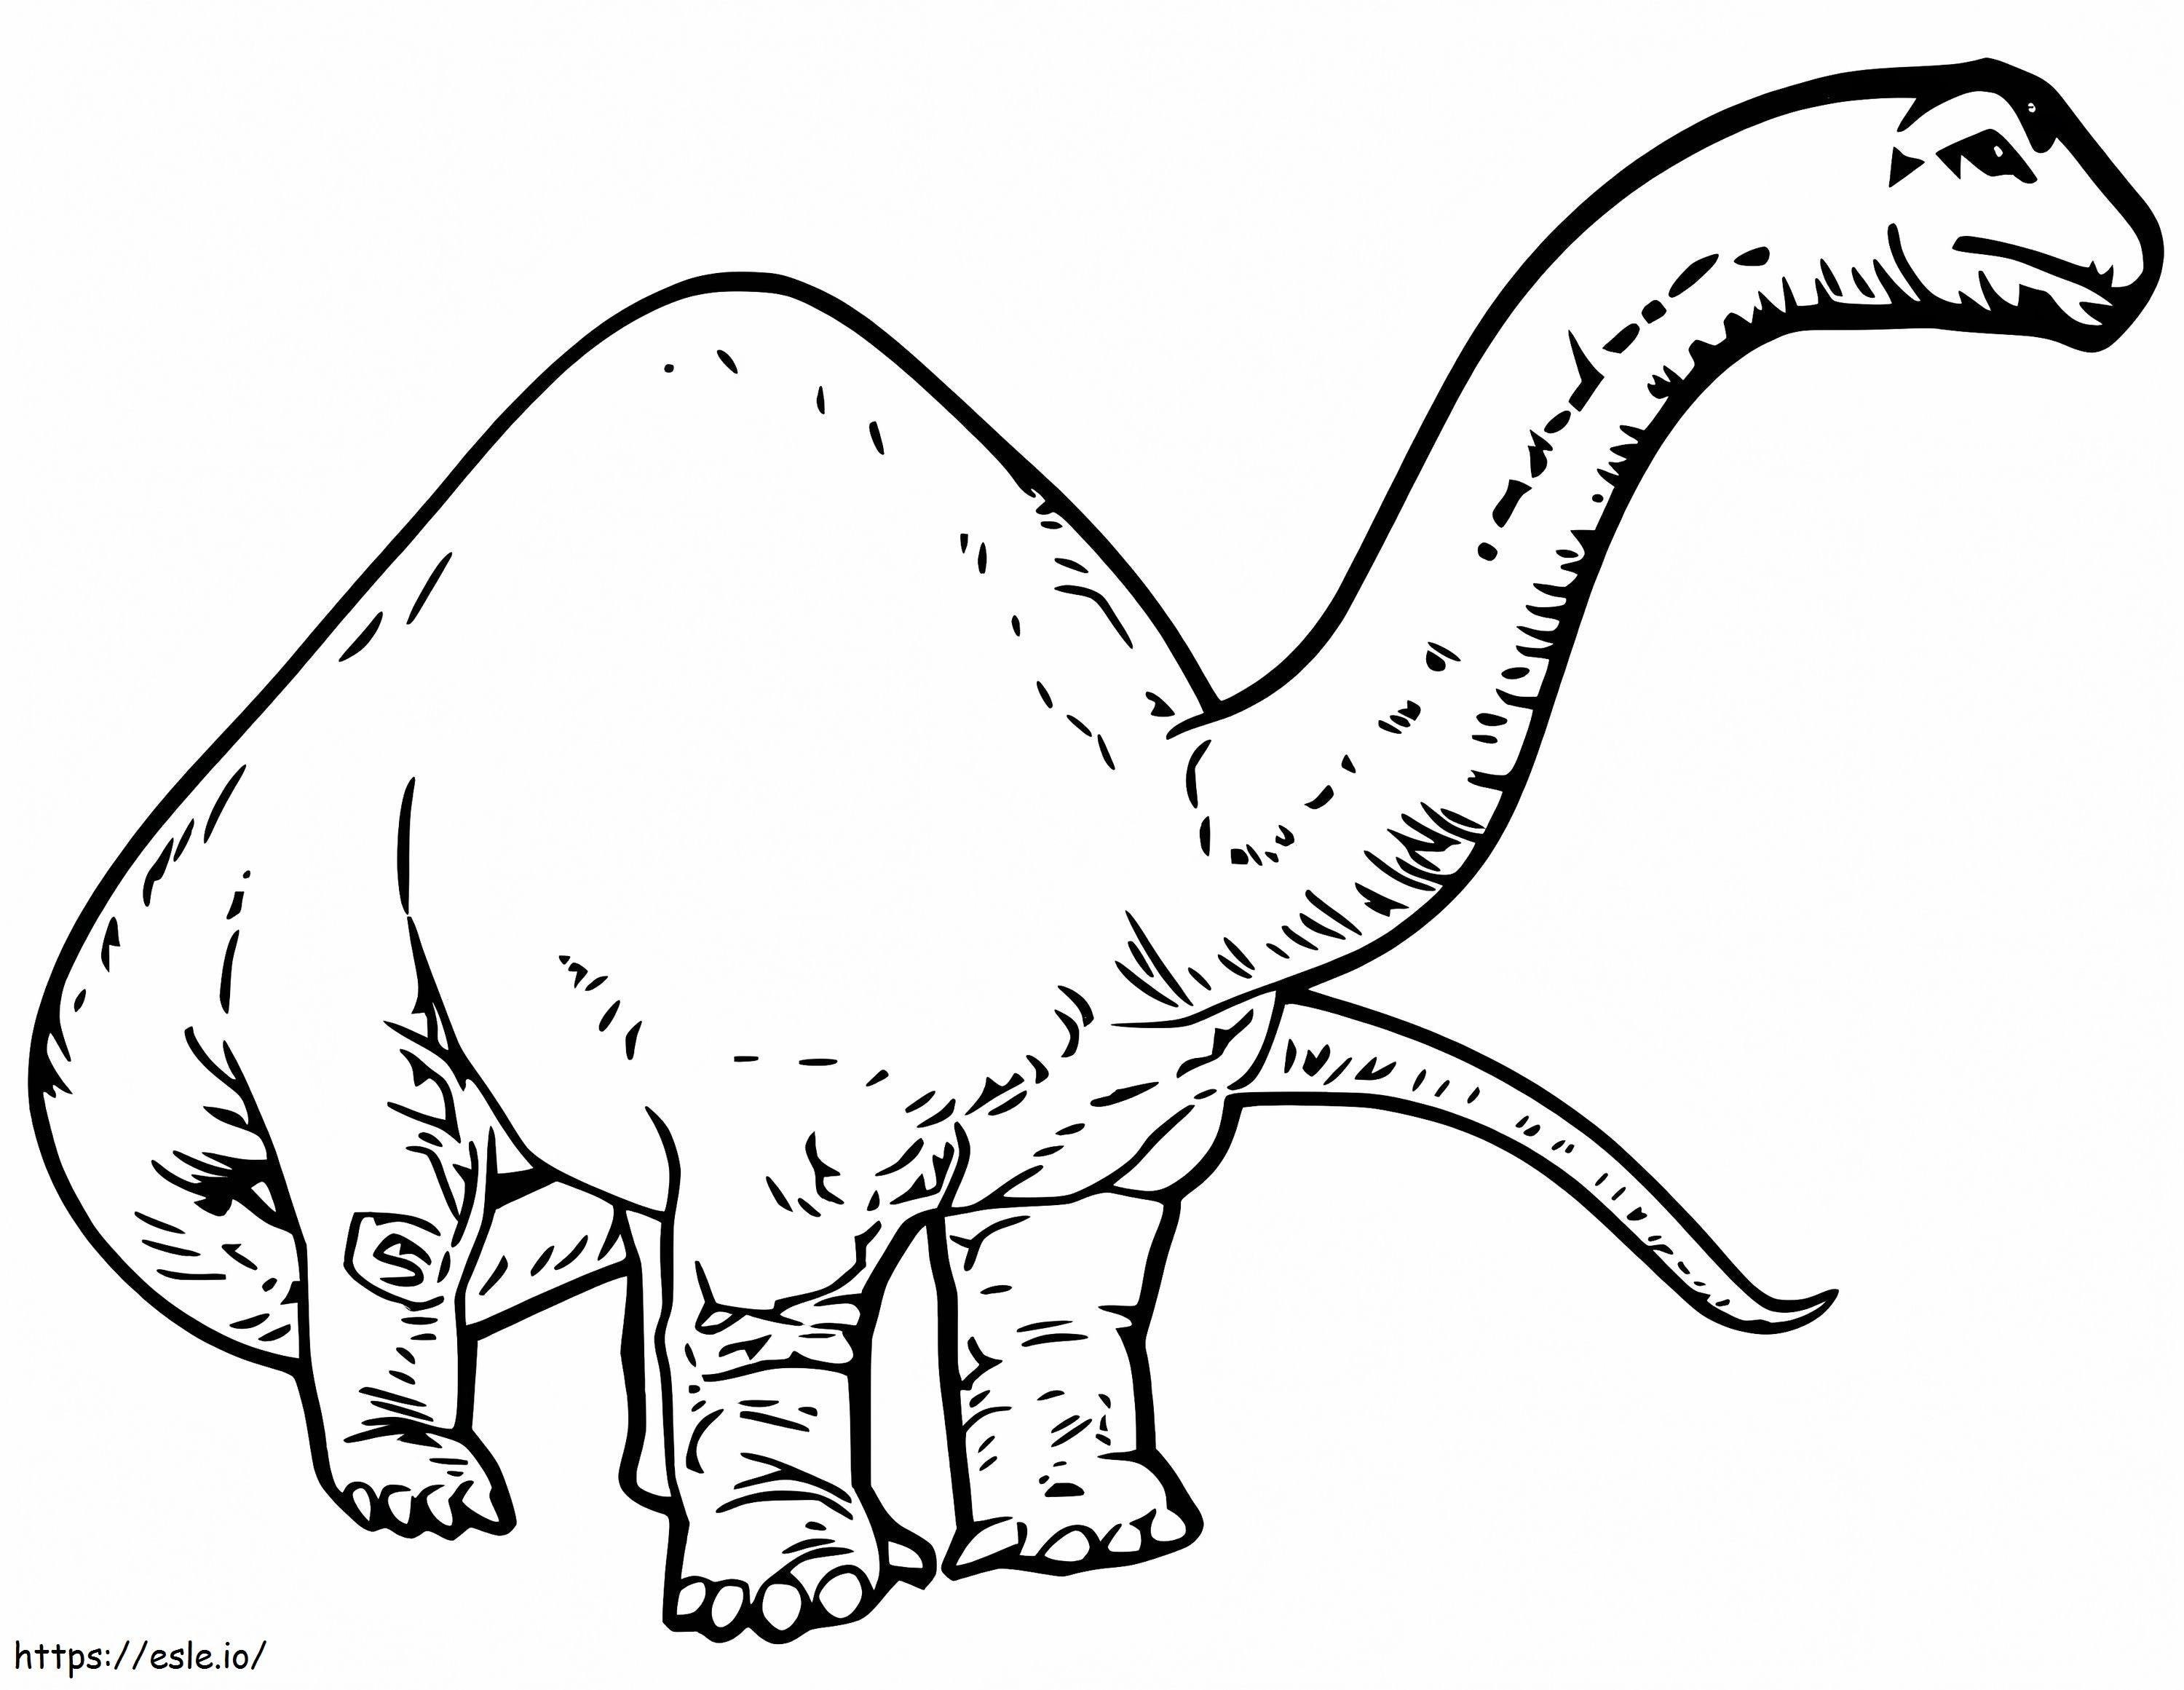 Brachiosaurus 11 coloring page